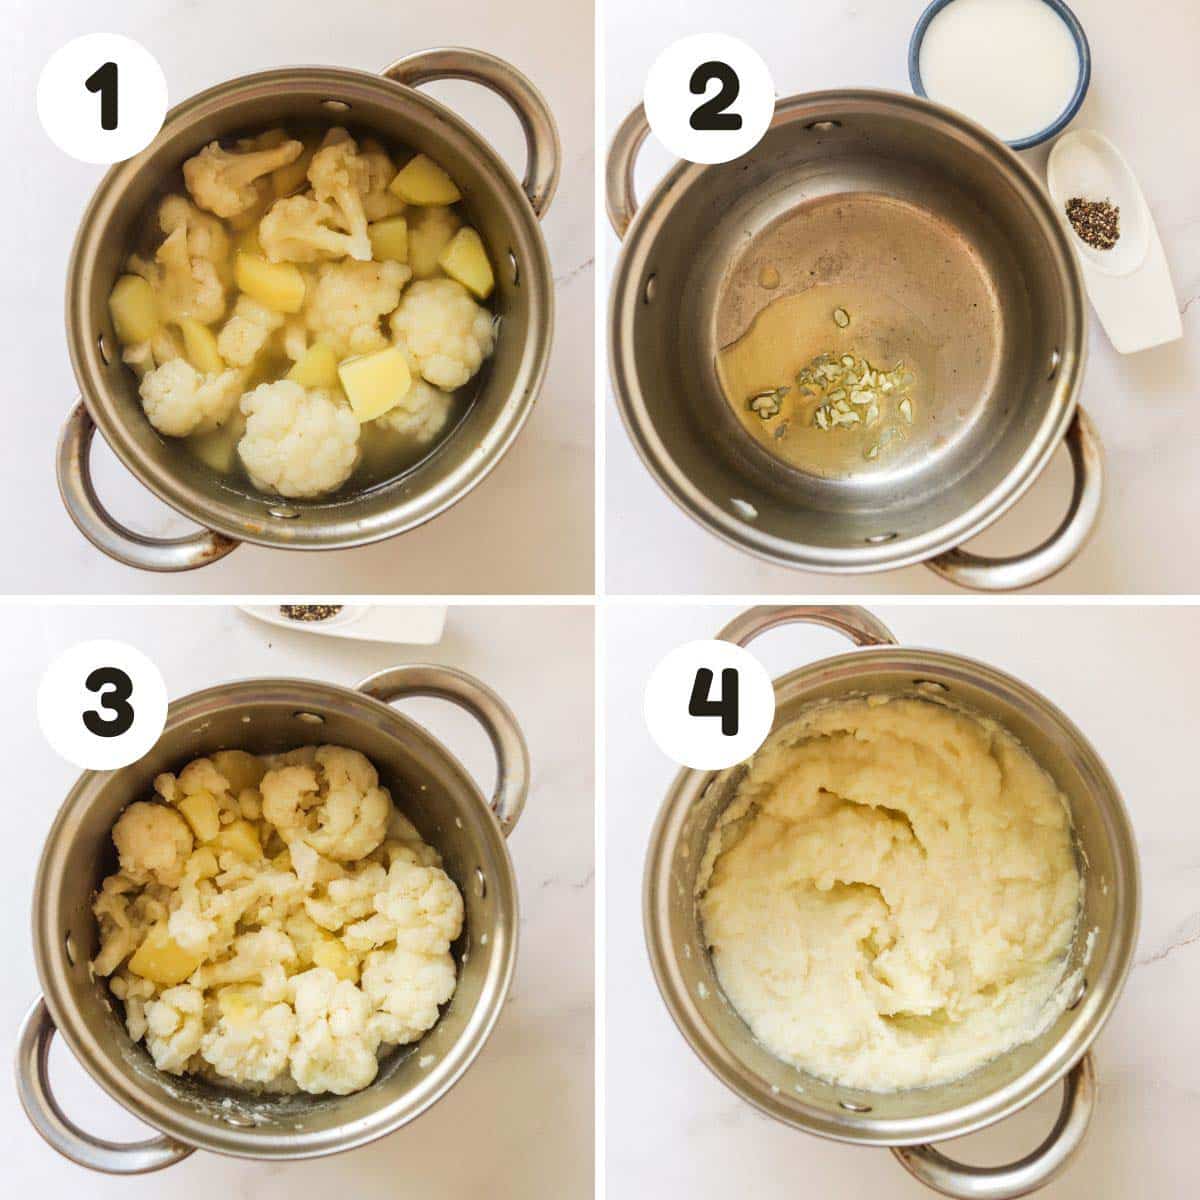 Steps to make the mashed potatoes.